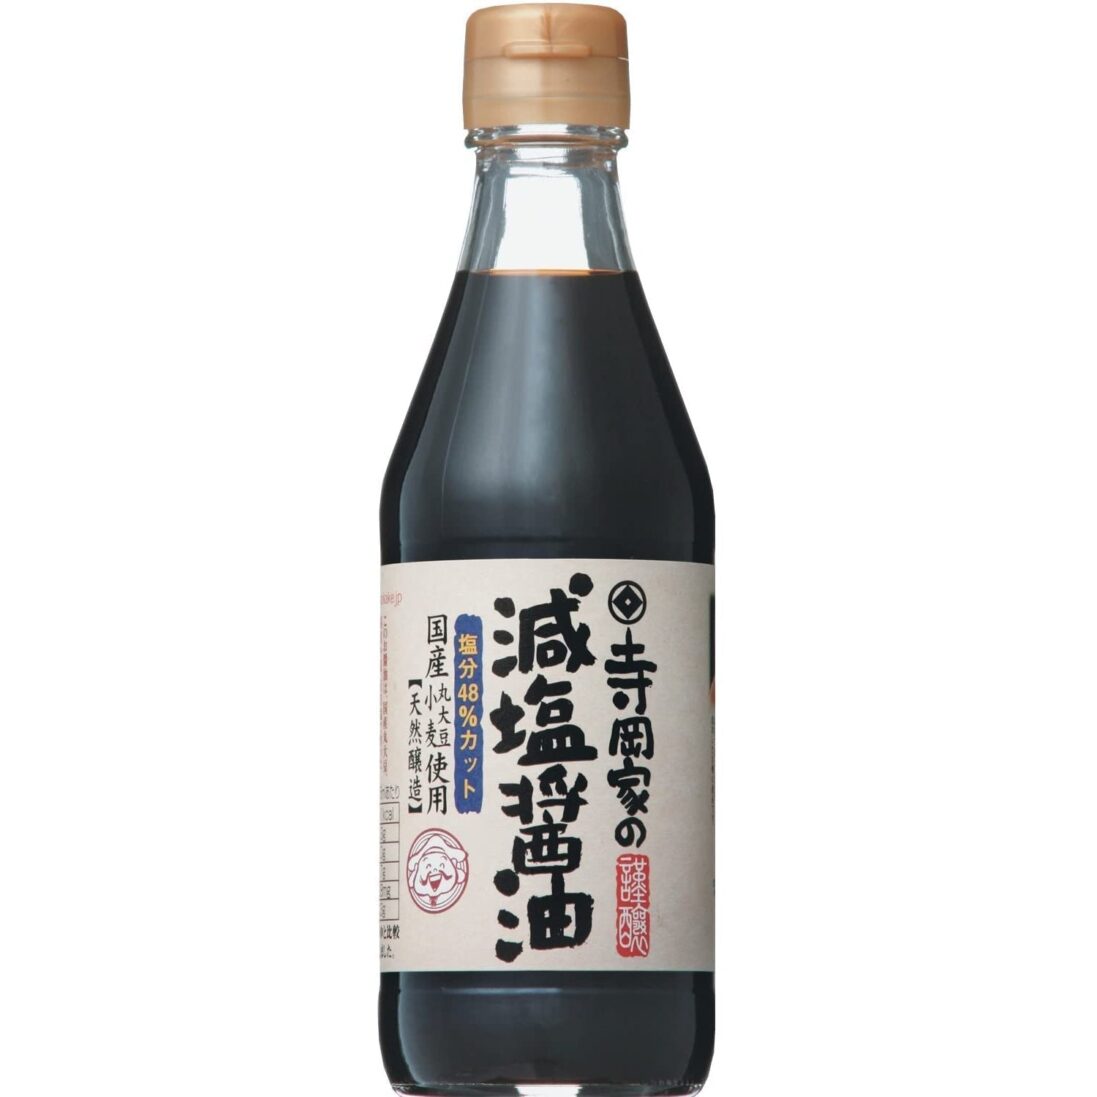 Teraoka Low Sodium Shoyu (Less Salt Japanese Soy Sauce) 300ml